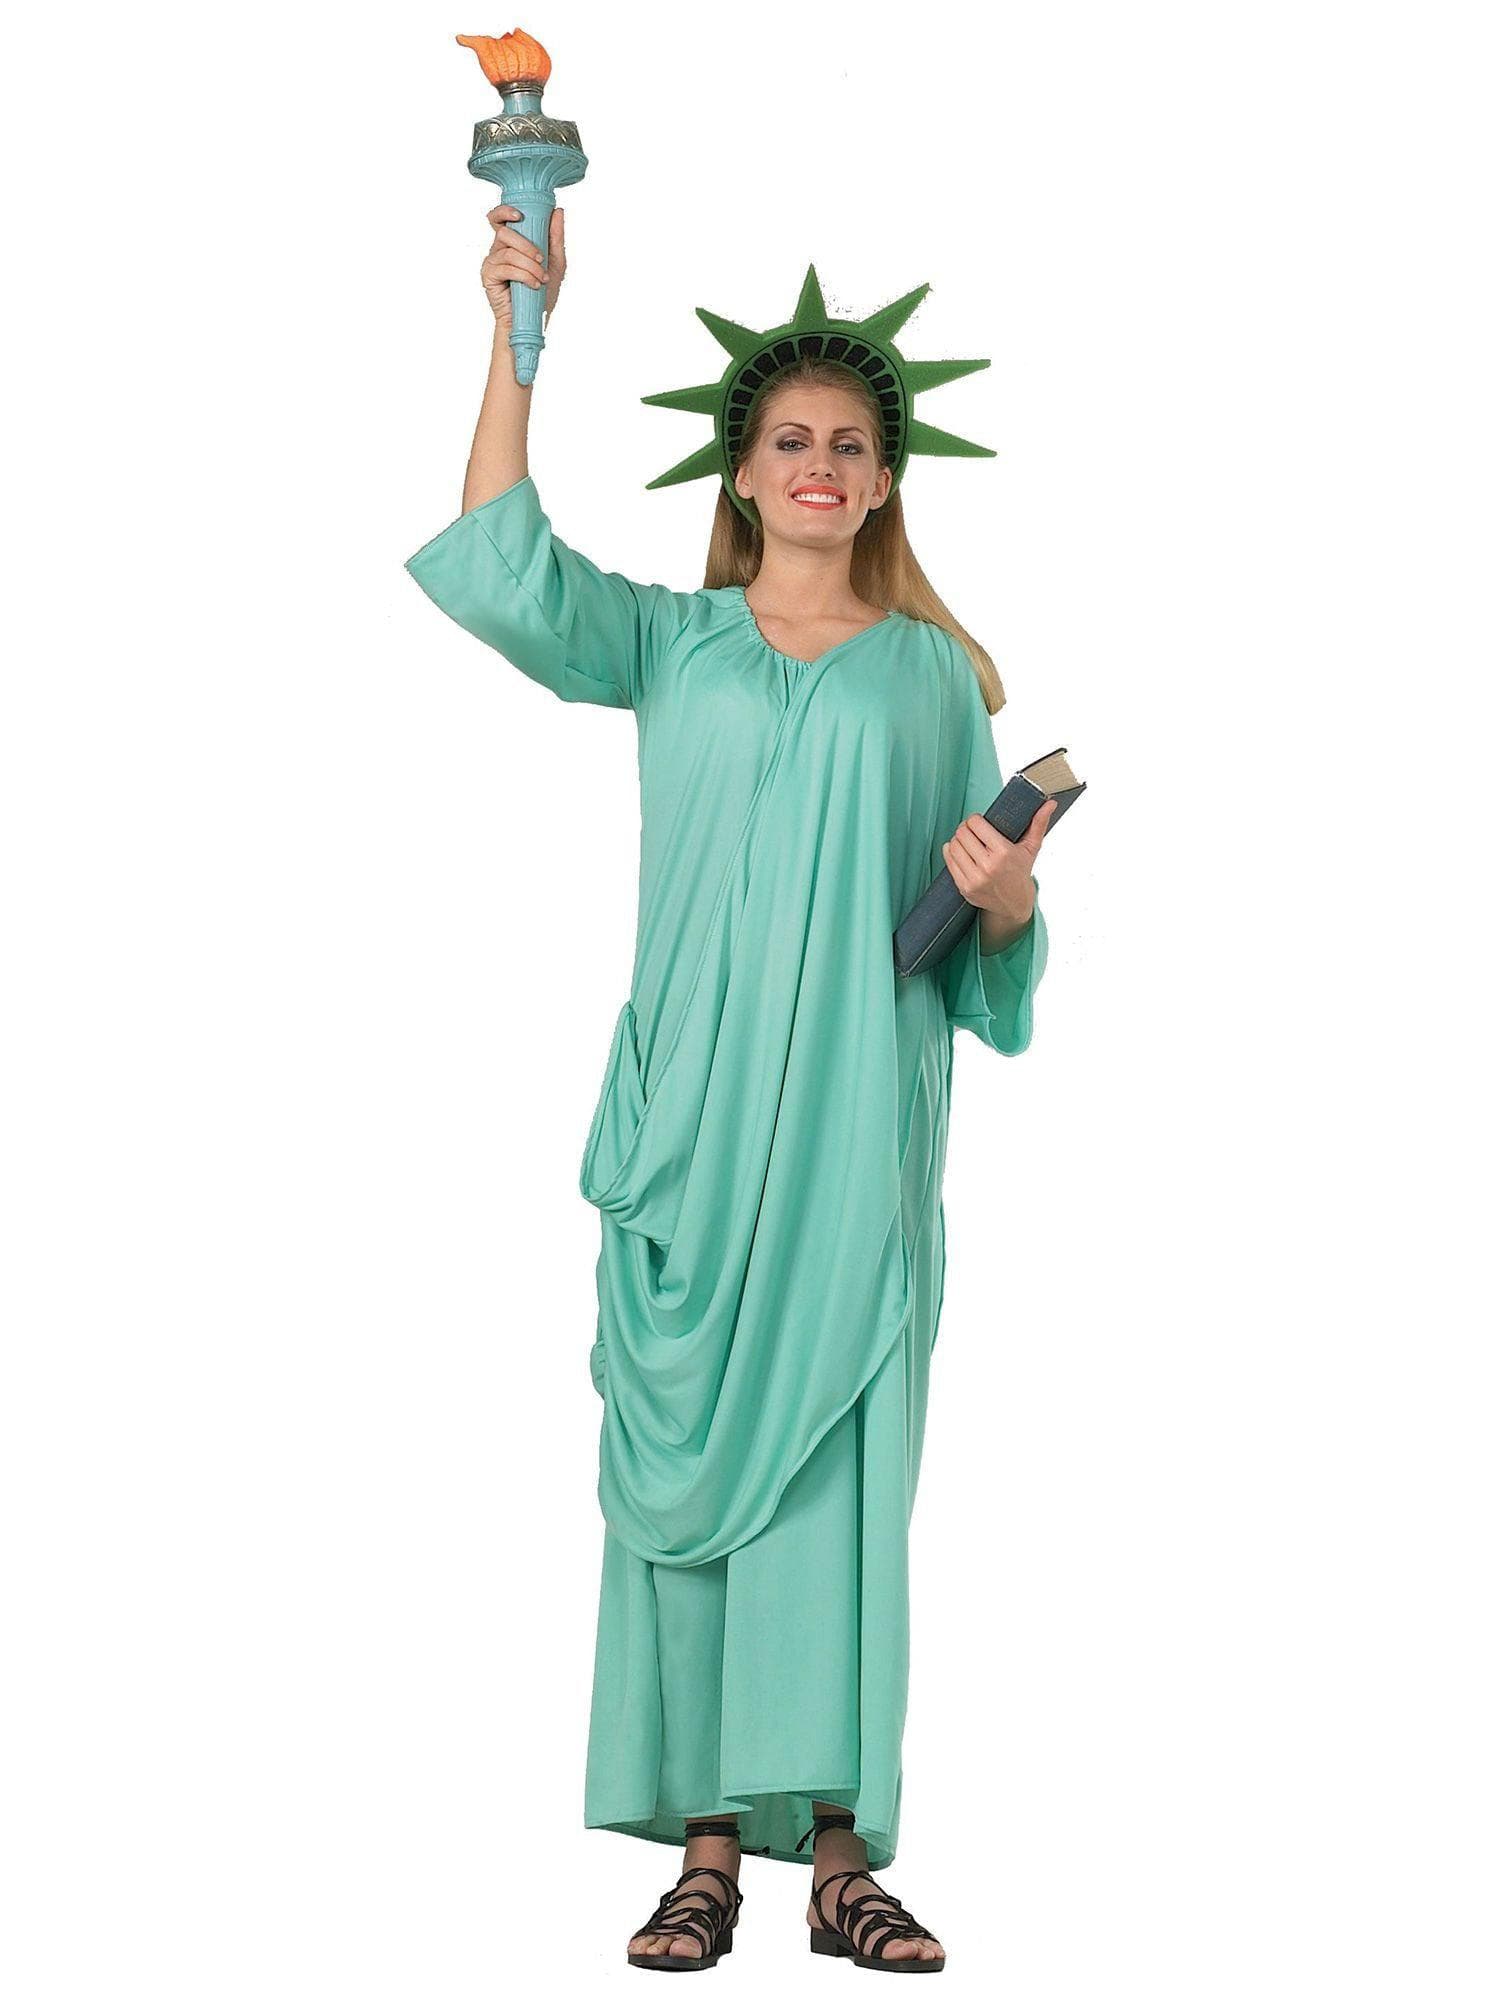 Women's Statue of Liberty Costume - costumes.com